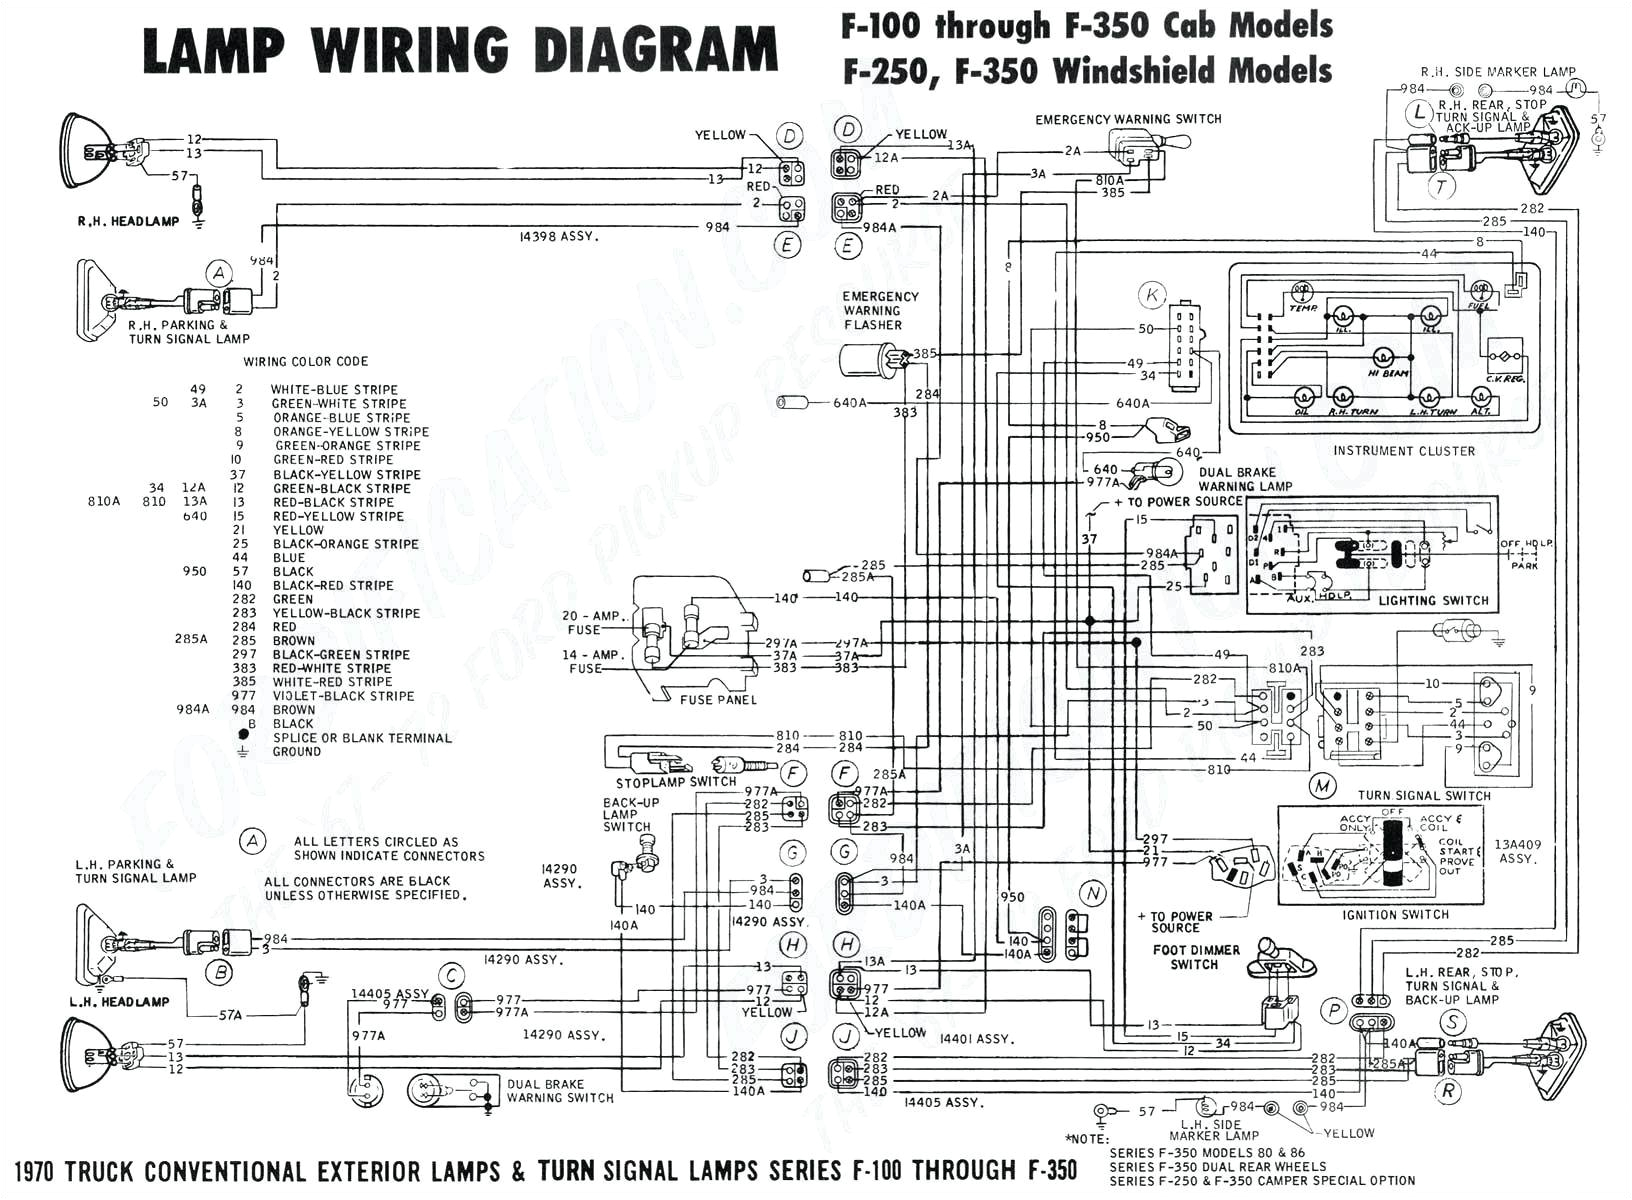 crosley wiring diagram wiring diagram mega crosley car wiring diagram